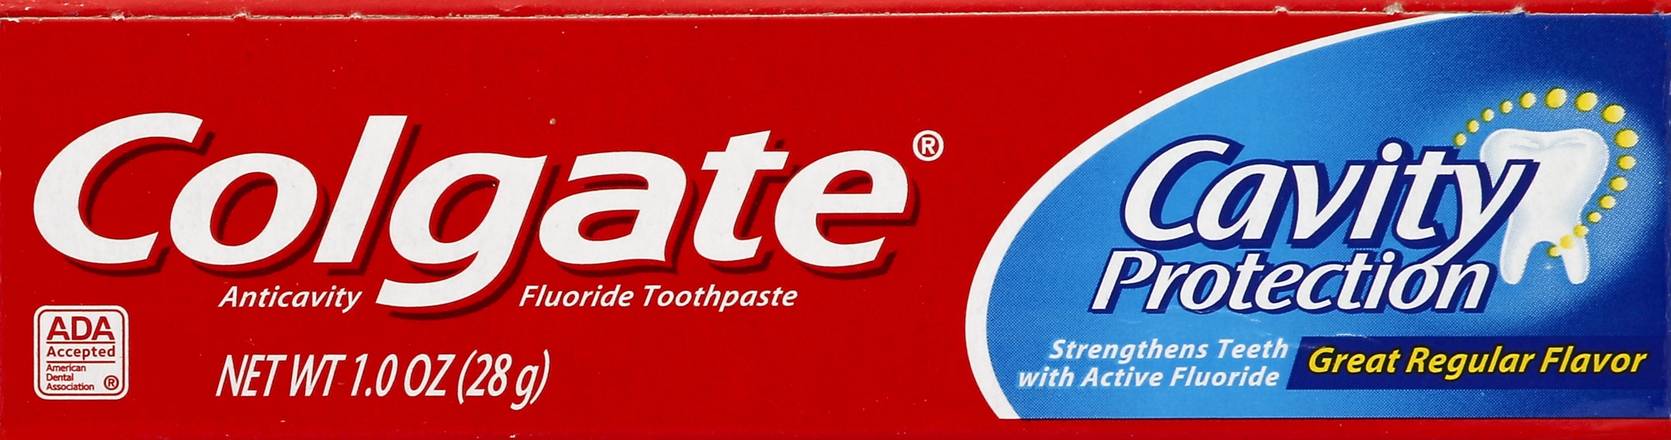 Colgate Cavity Protection Great Regular Flavor Anticavity Fluoride Toothpaste